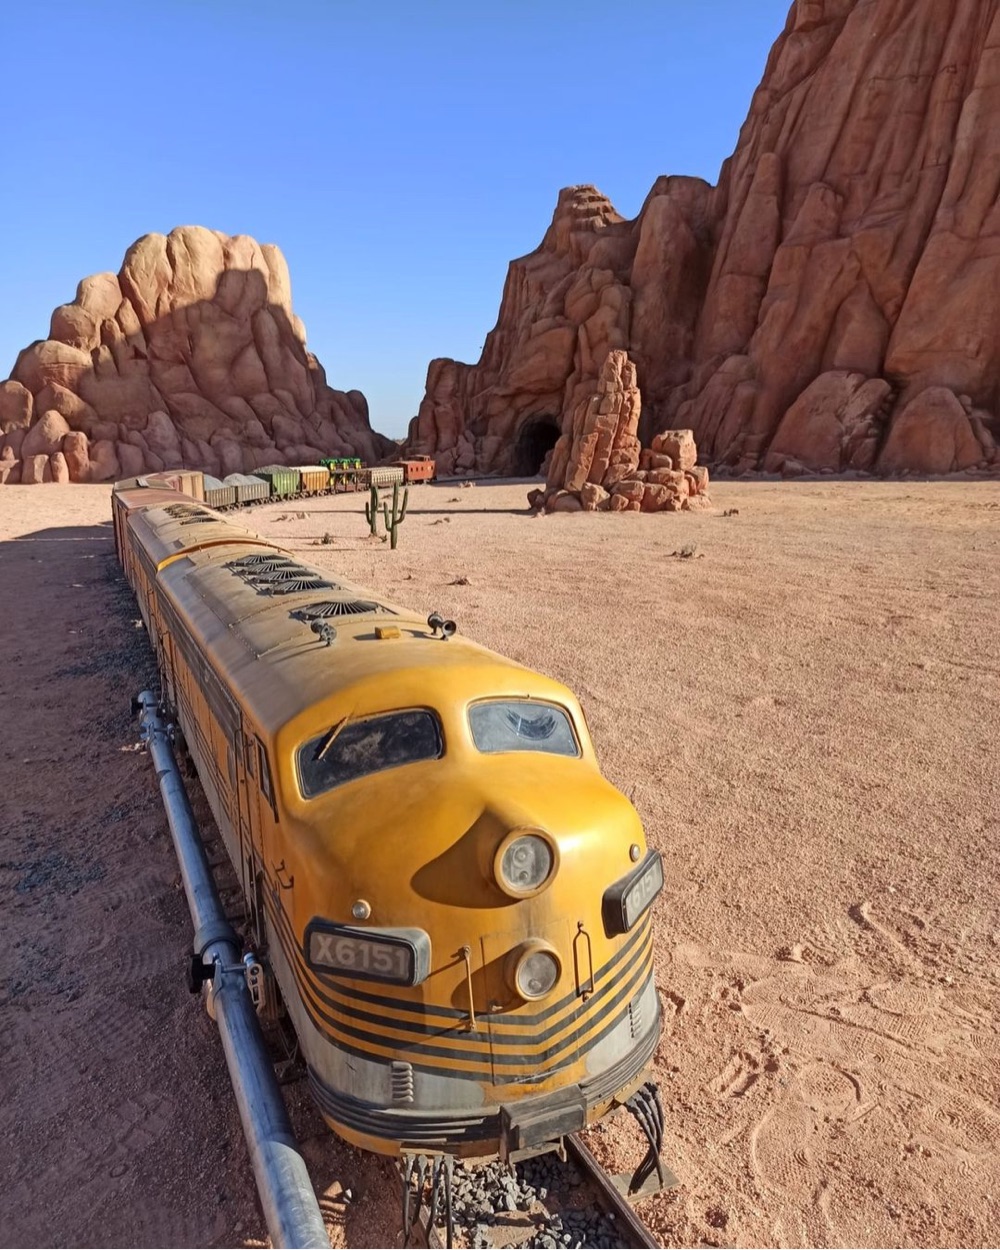 a model train in the desert